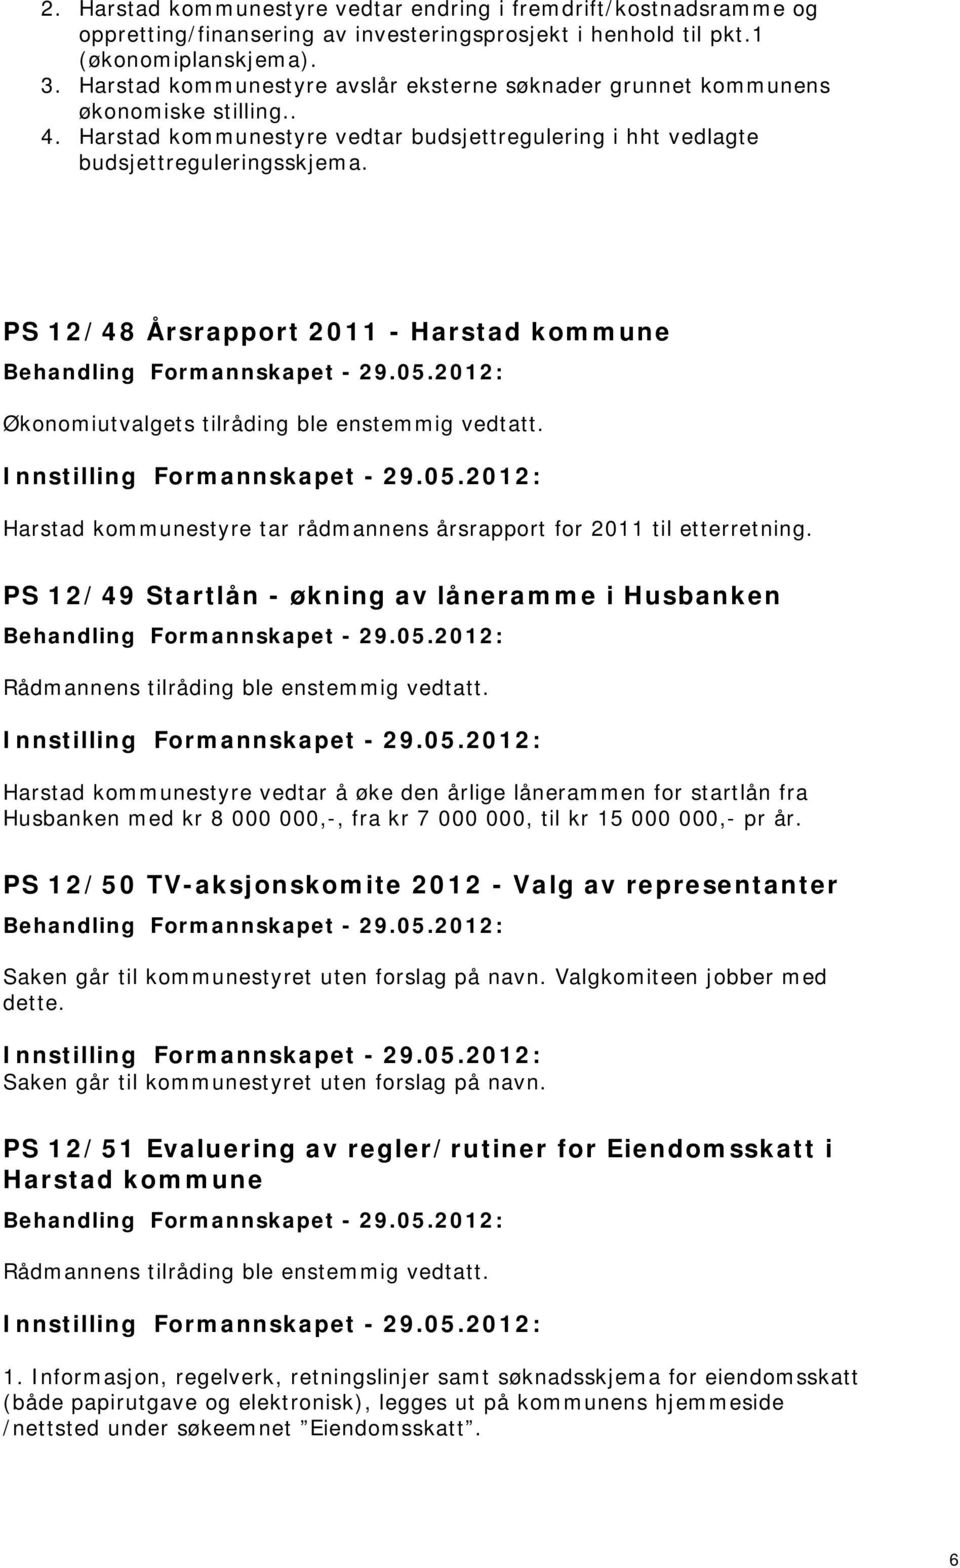 PS 12/48 Årsrapport 2011 - Harstad kommune Økonomiutvalgets tilråding ble enstemmig vedtatt. Harstad kommunestyre tar rådmannens årsrapport for 2011 til etterretning.